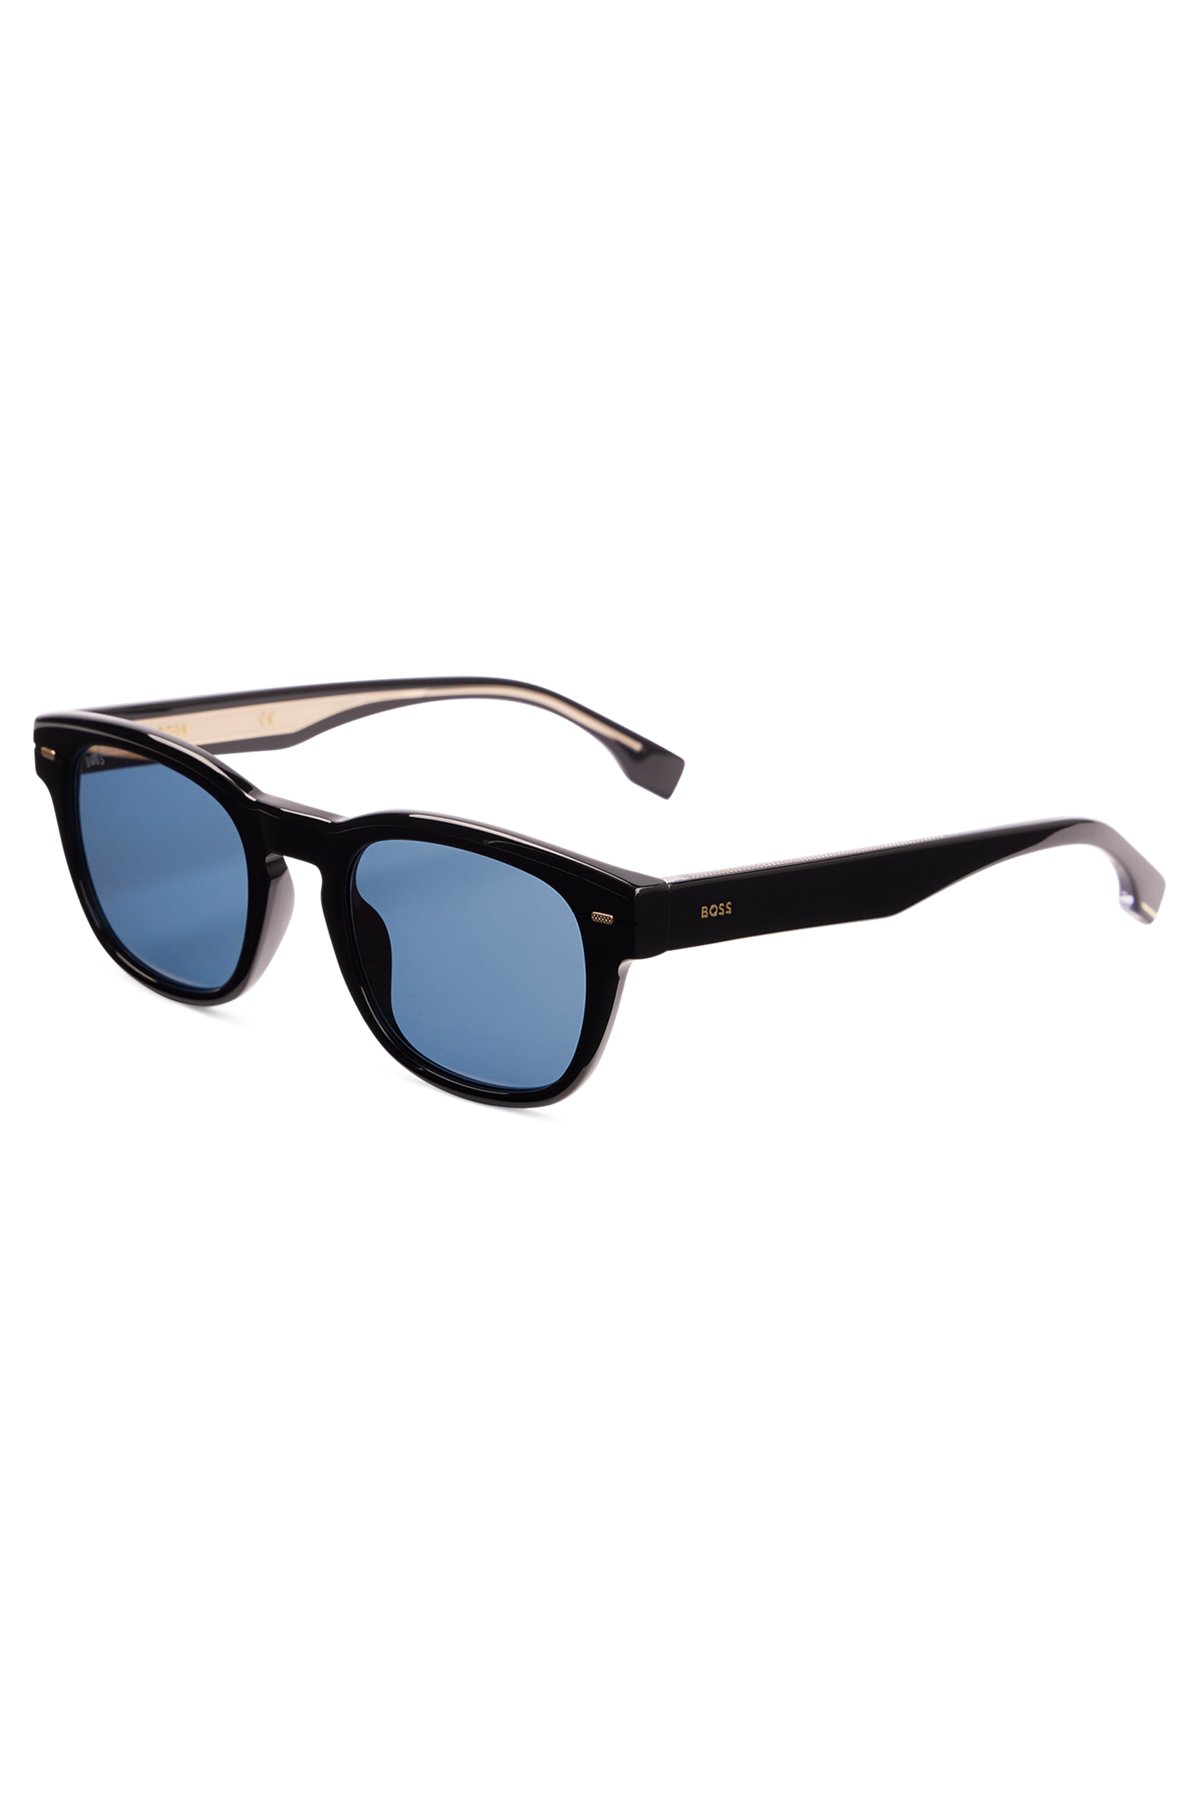 Black-acetate sunglasses with mirrored blue lenses, Black